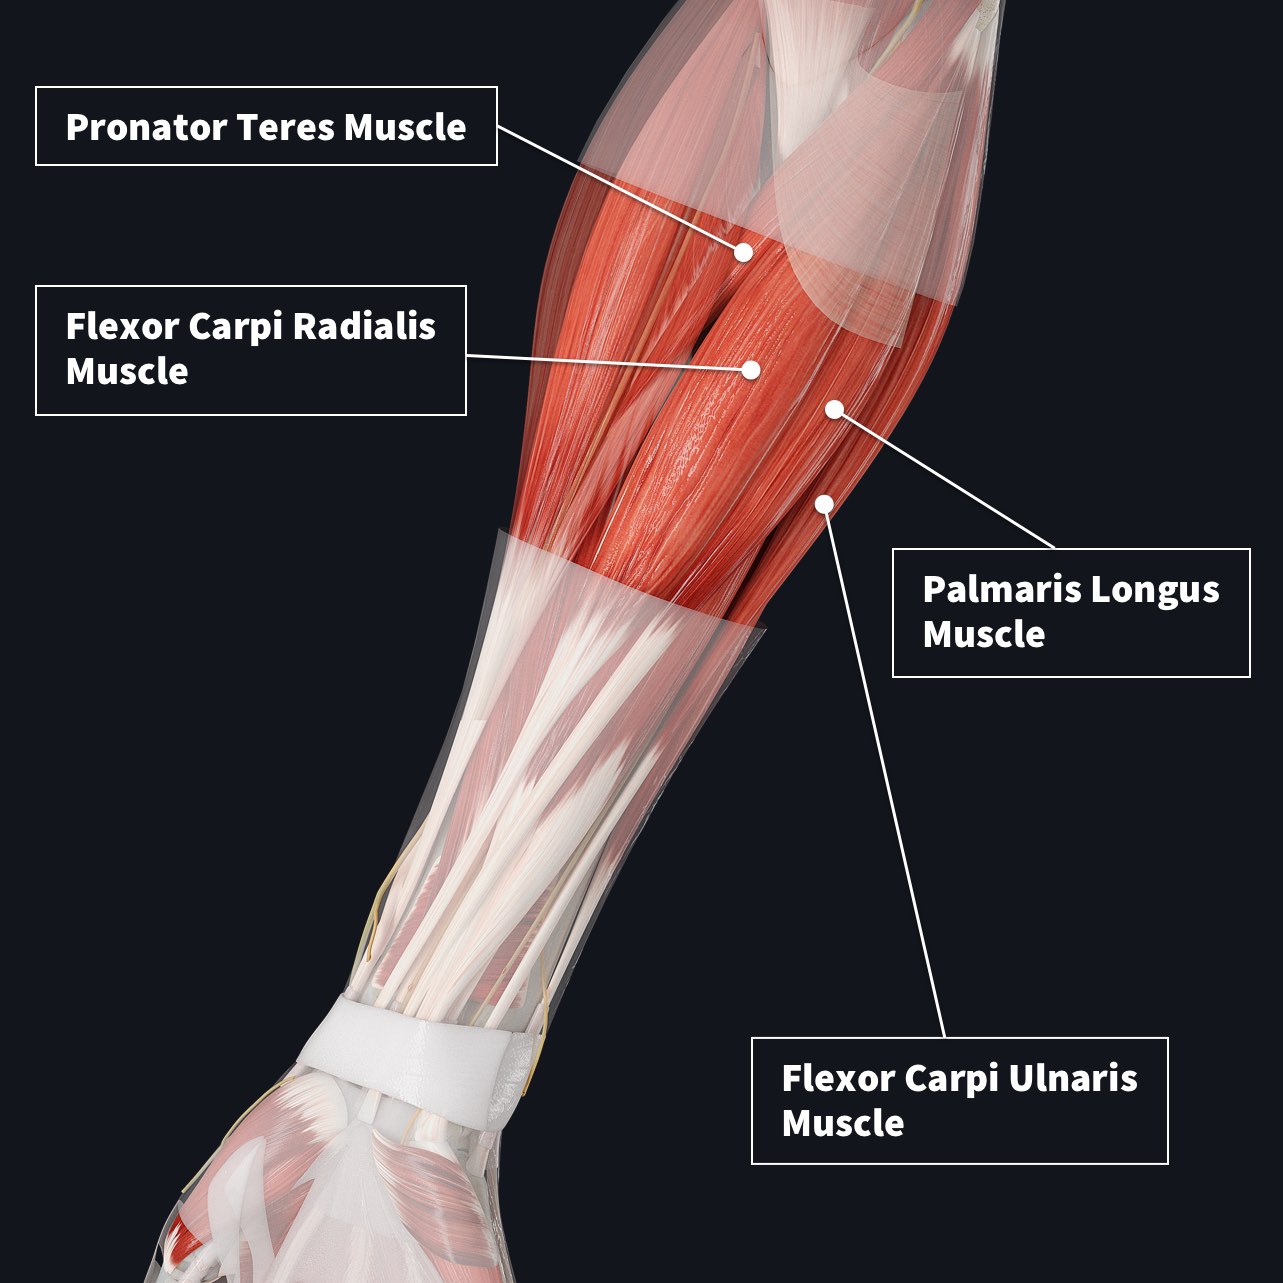 The anterior compartment of the forearm showing the superficial muscles including the Pronator Teres, Palmaris Longus, Flexor Carpi Radialis and the  Flexor Carpi Ulnaris